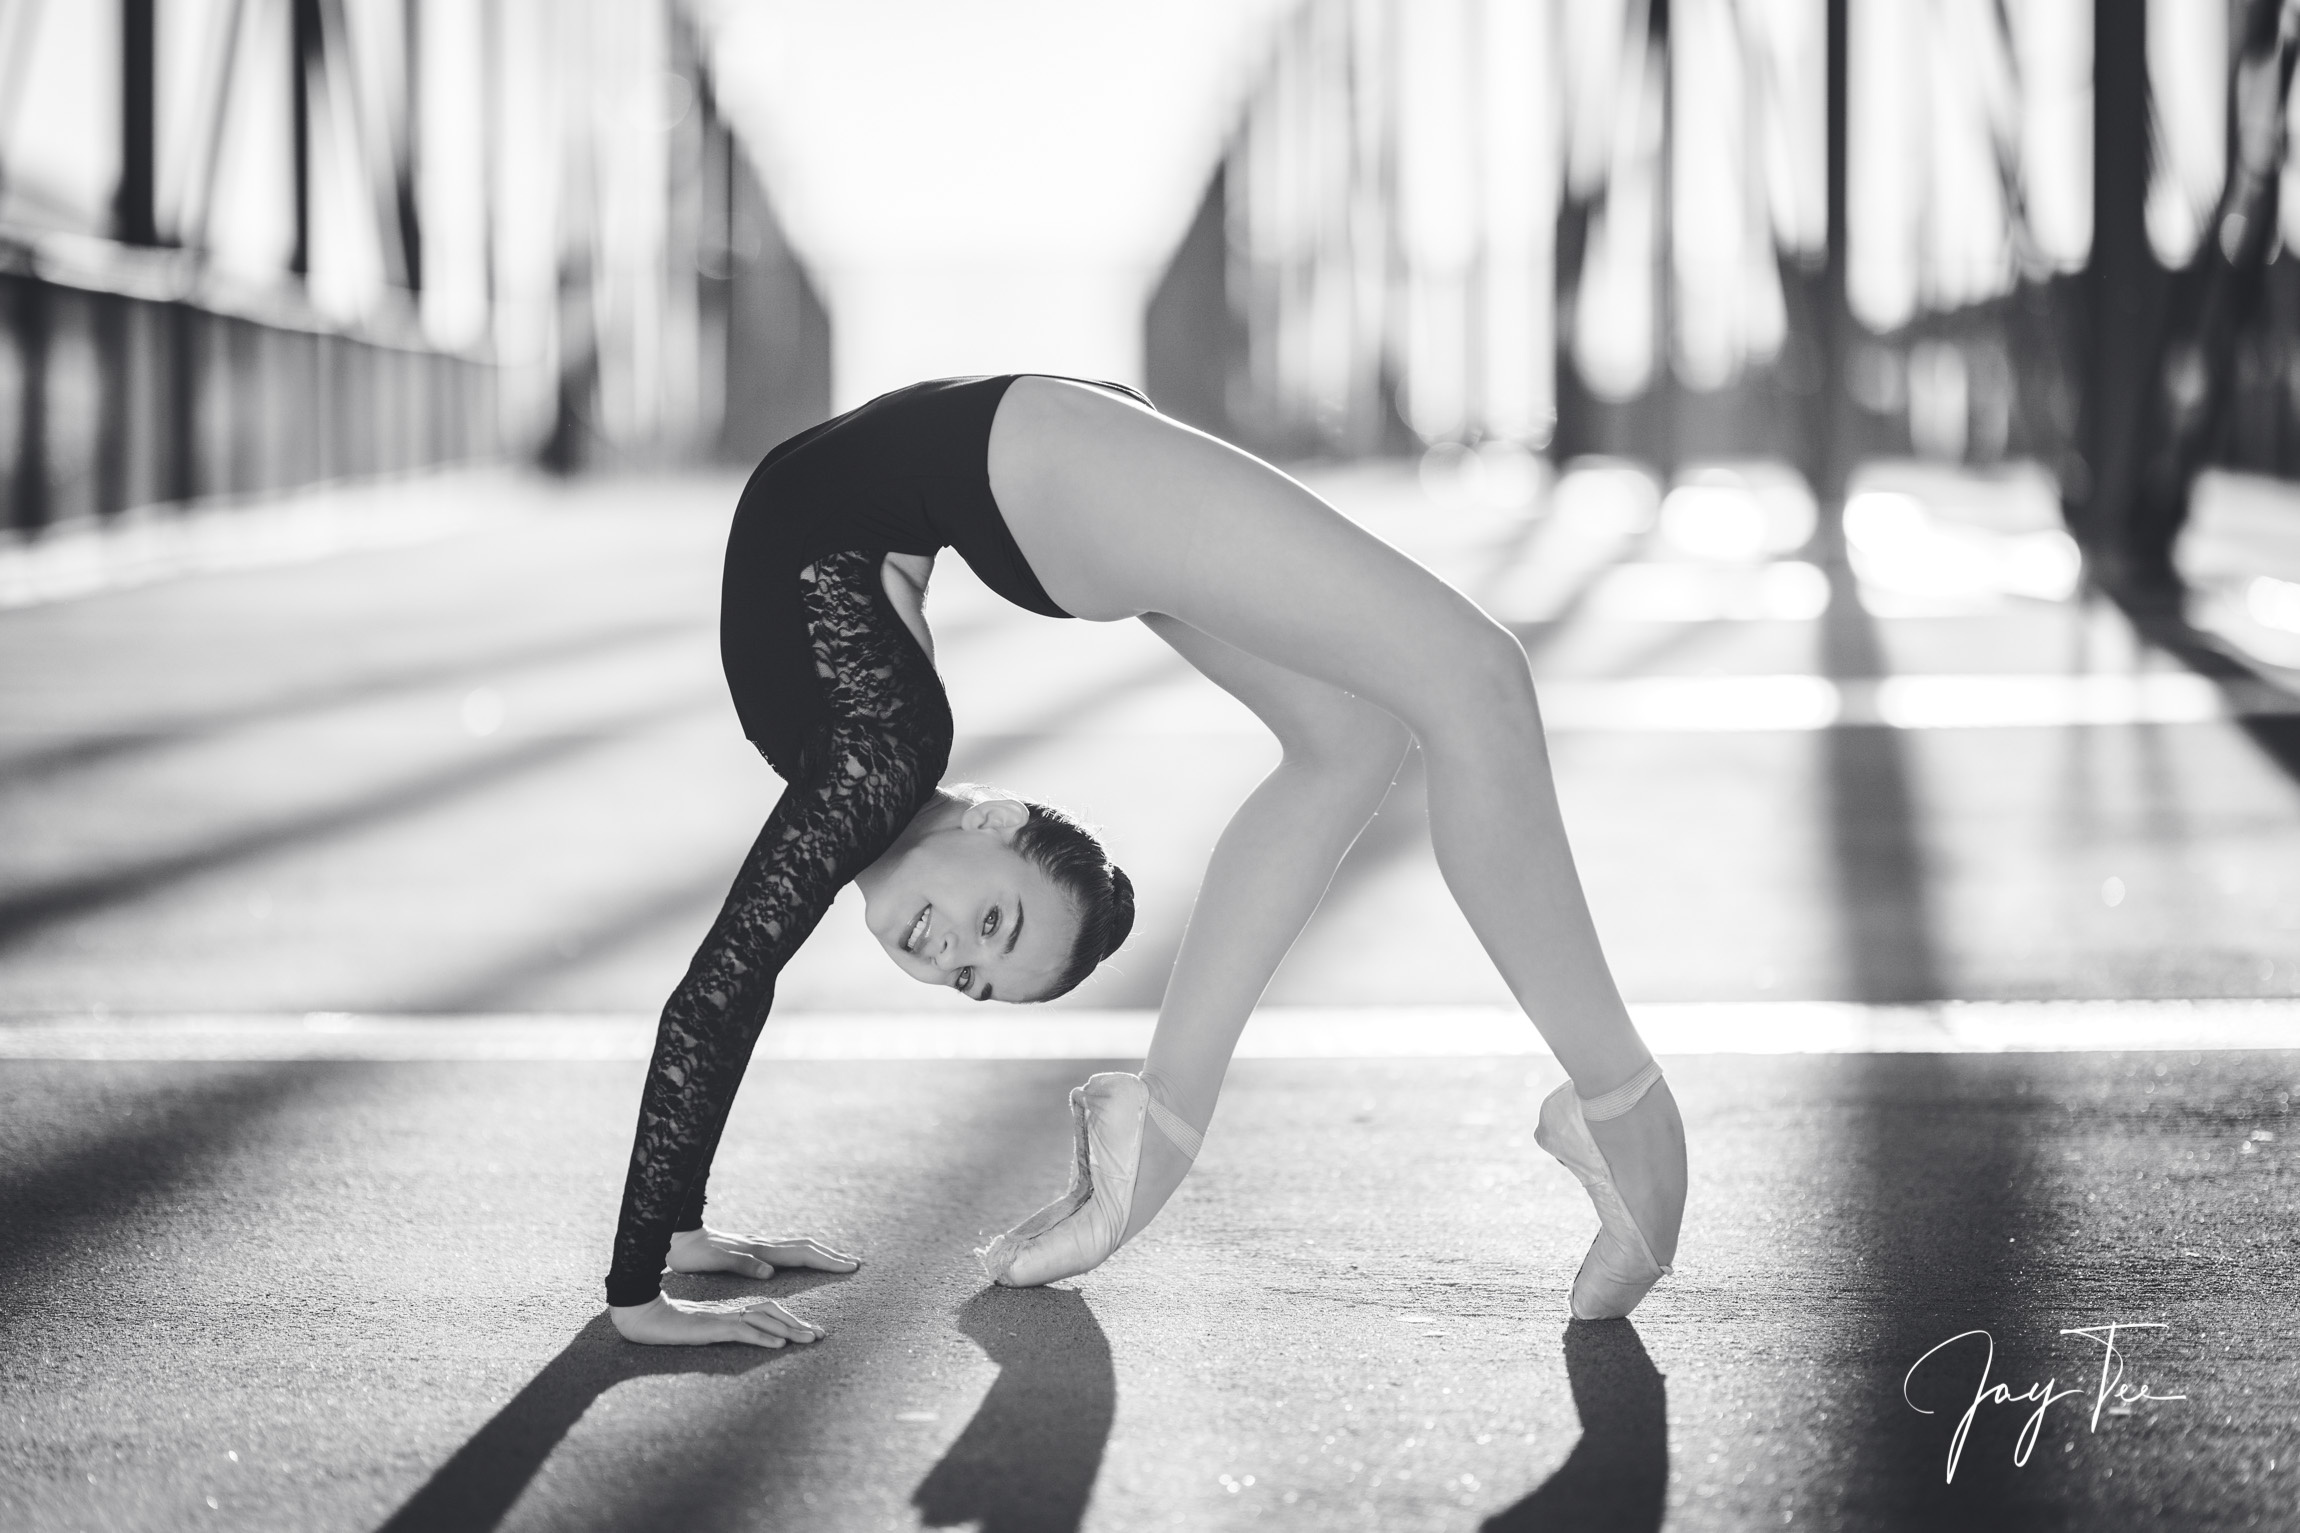 Acrobatic Sports: Dance, Ballet, Gymnastic trick, Flexibility. 2300x1540 HD Background.